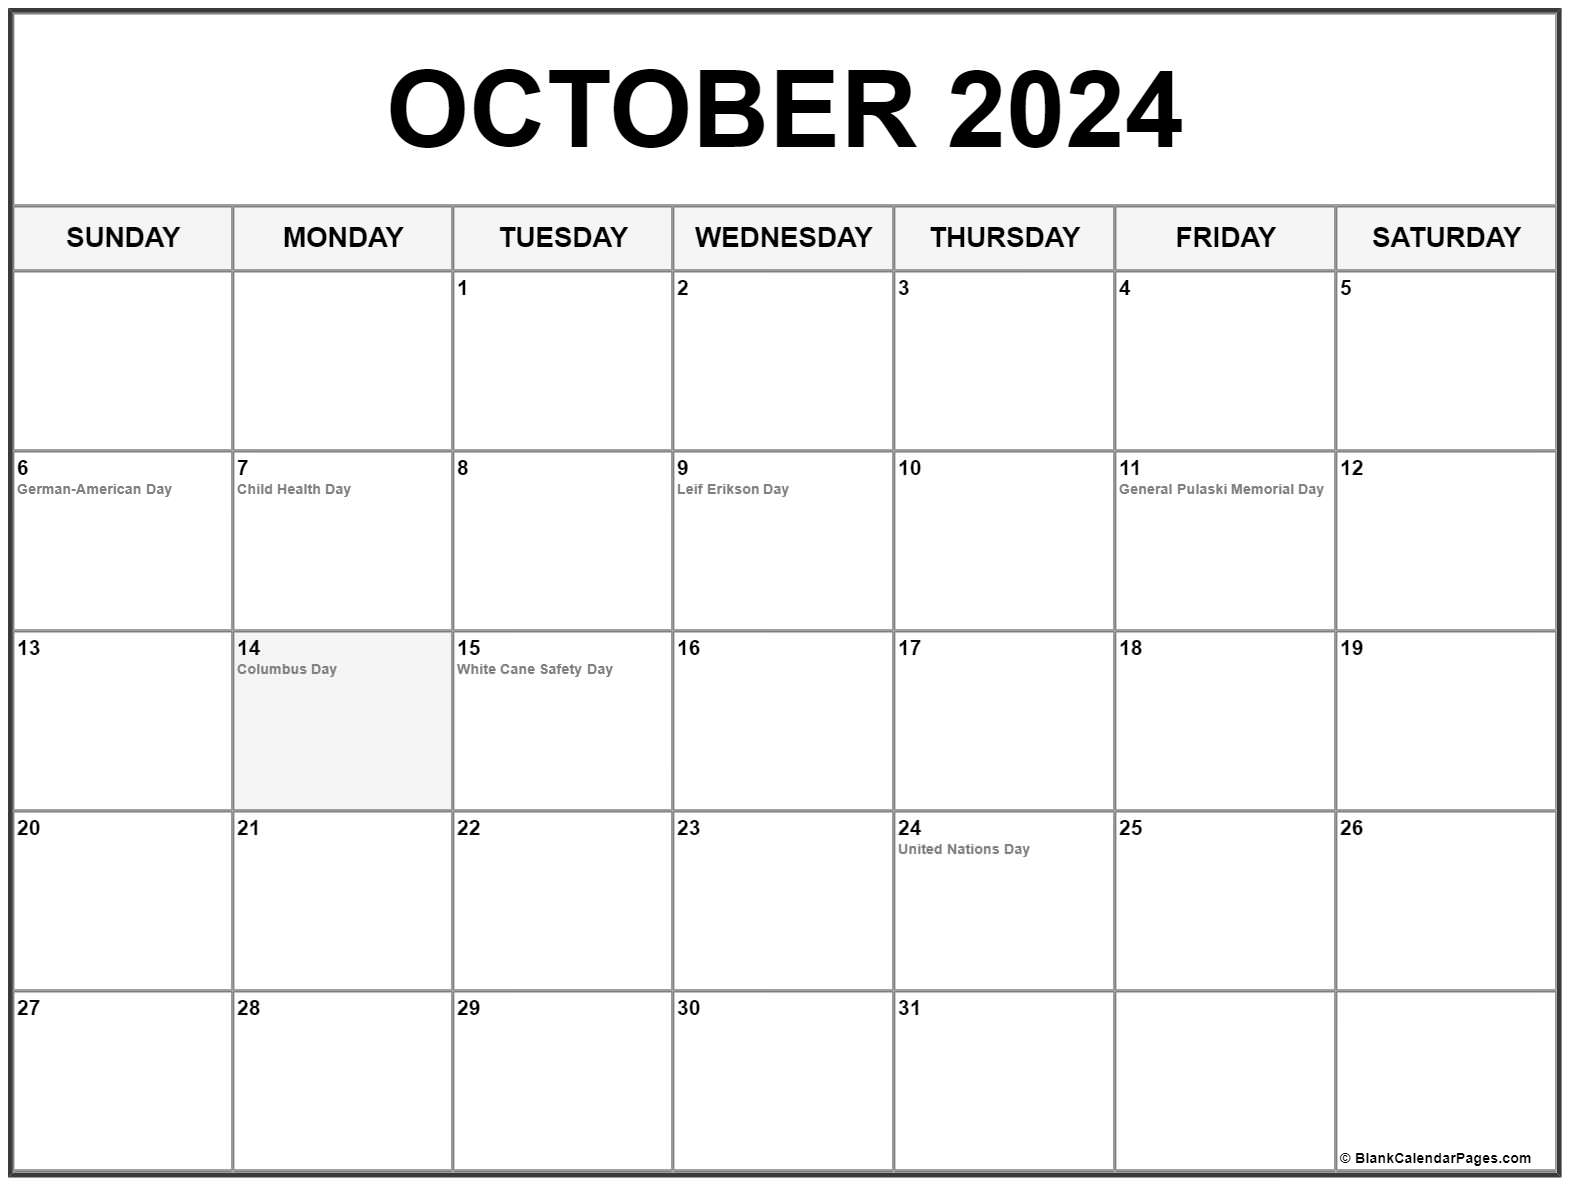 October 2022 Calendar Holidays October 2022 With Holidays Calendar